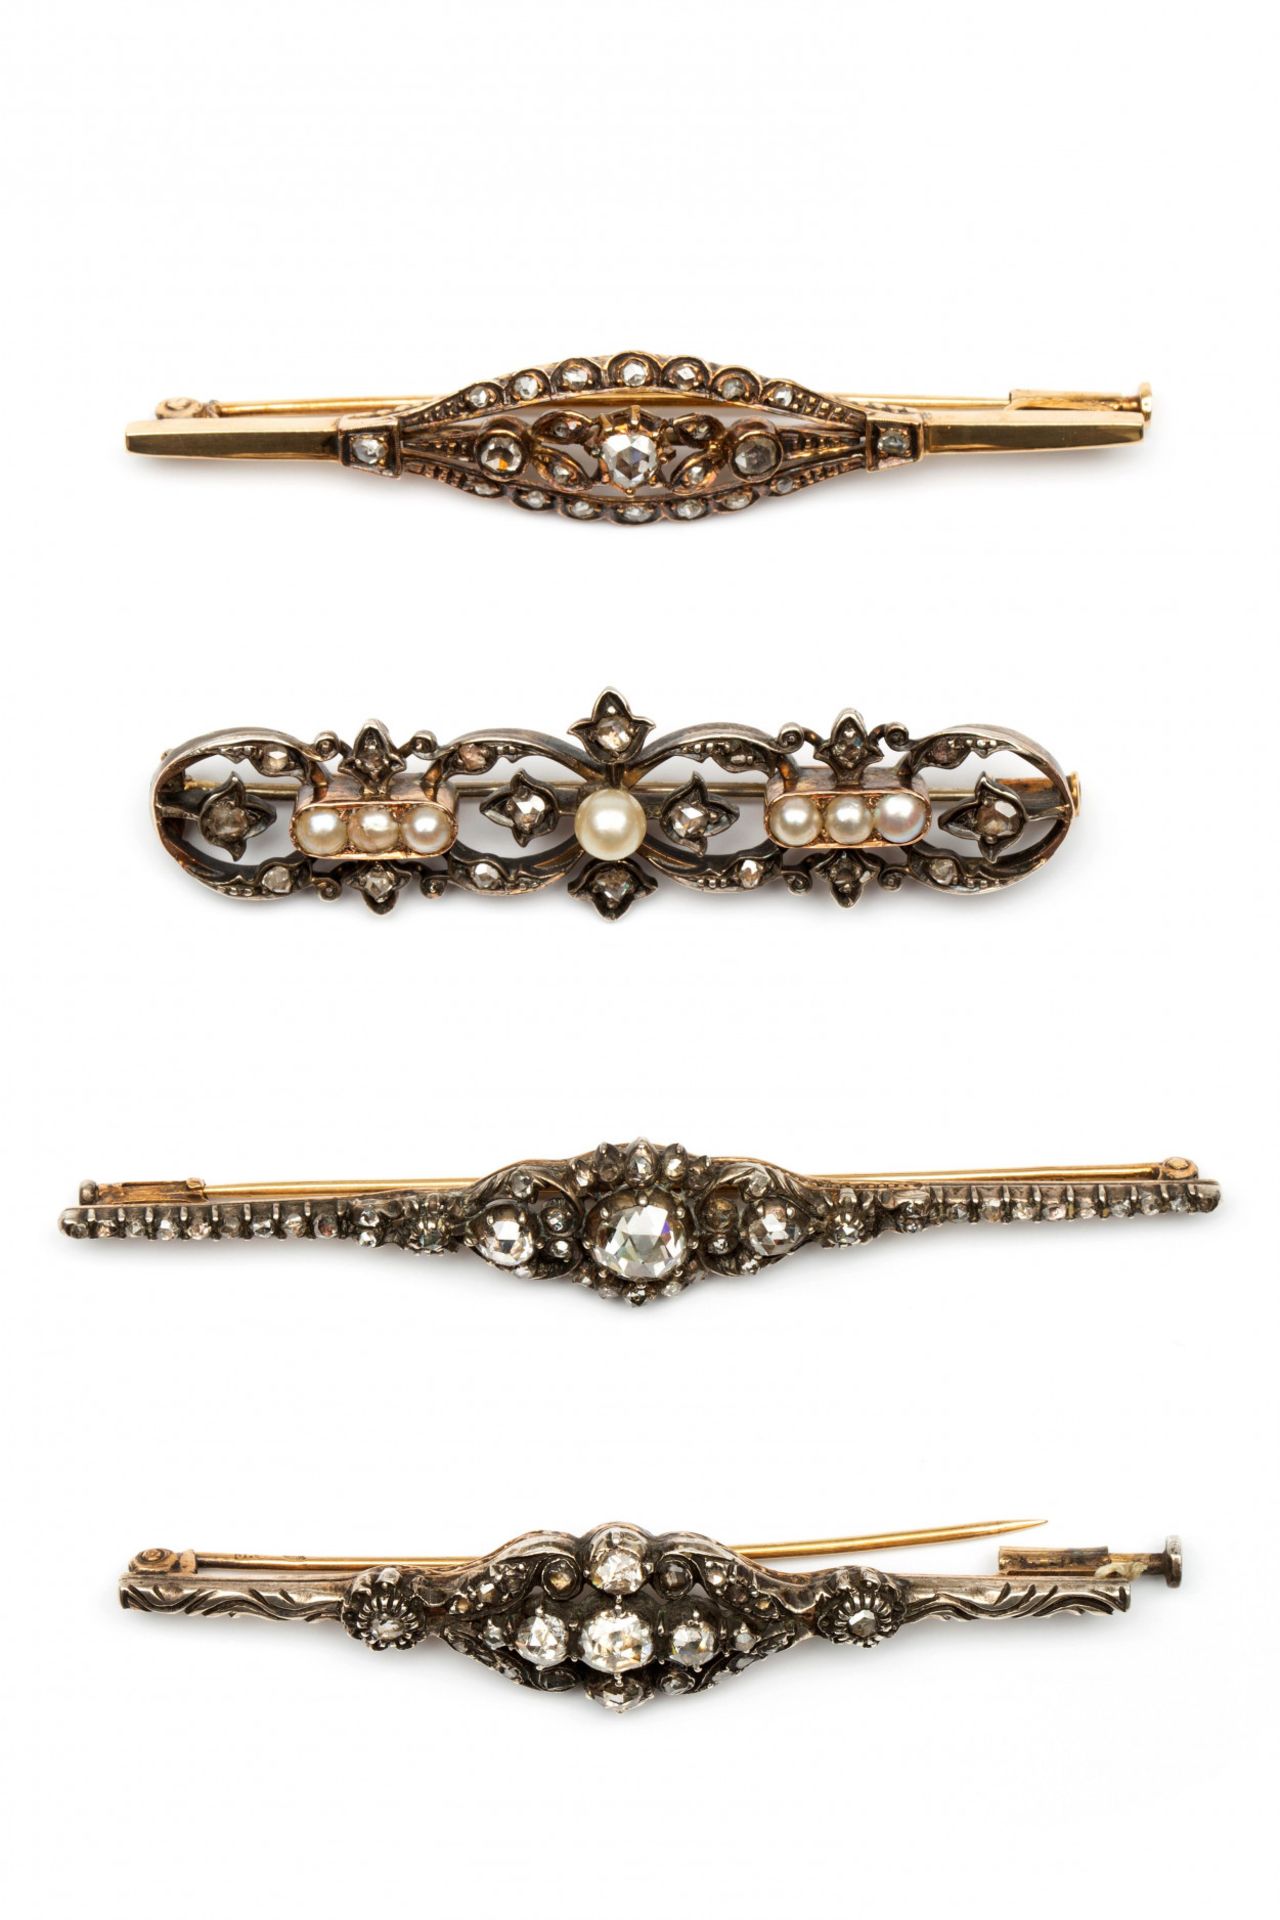 Vier zilveren en gouden staafbroches, 1e helft 20e eeuw,